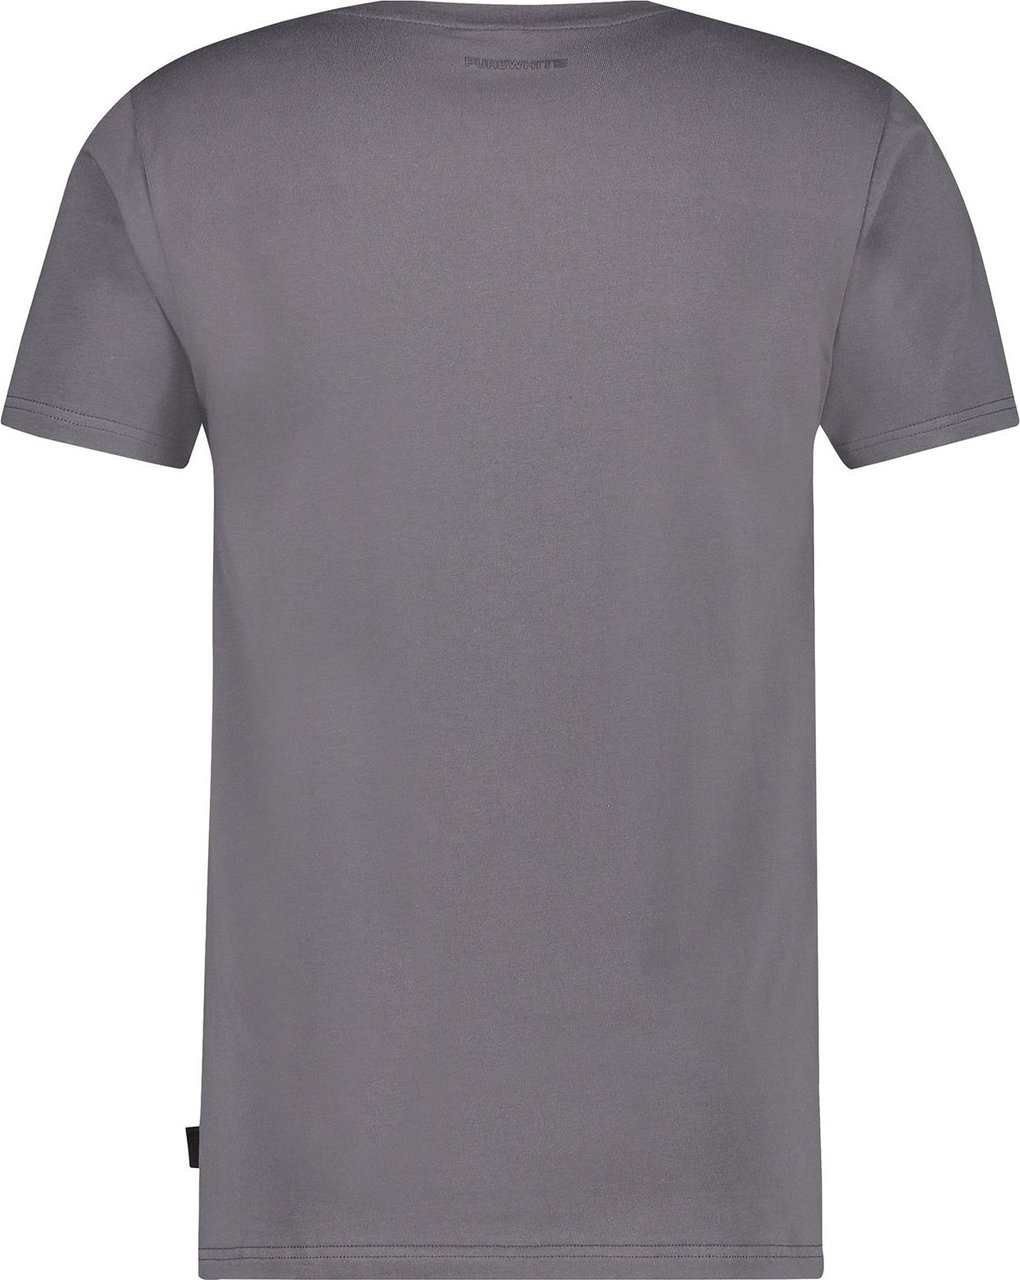 Purewhite Logo Stripe T-shirt - Antra Grijs